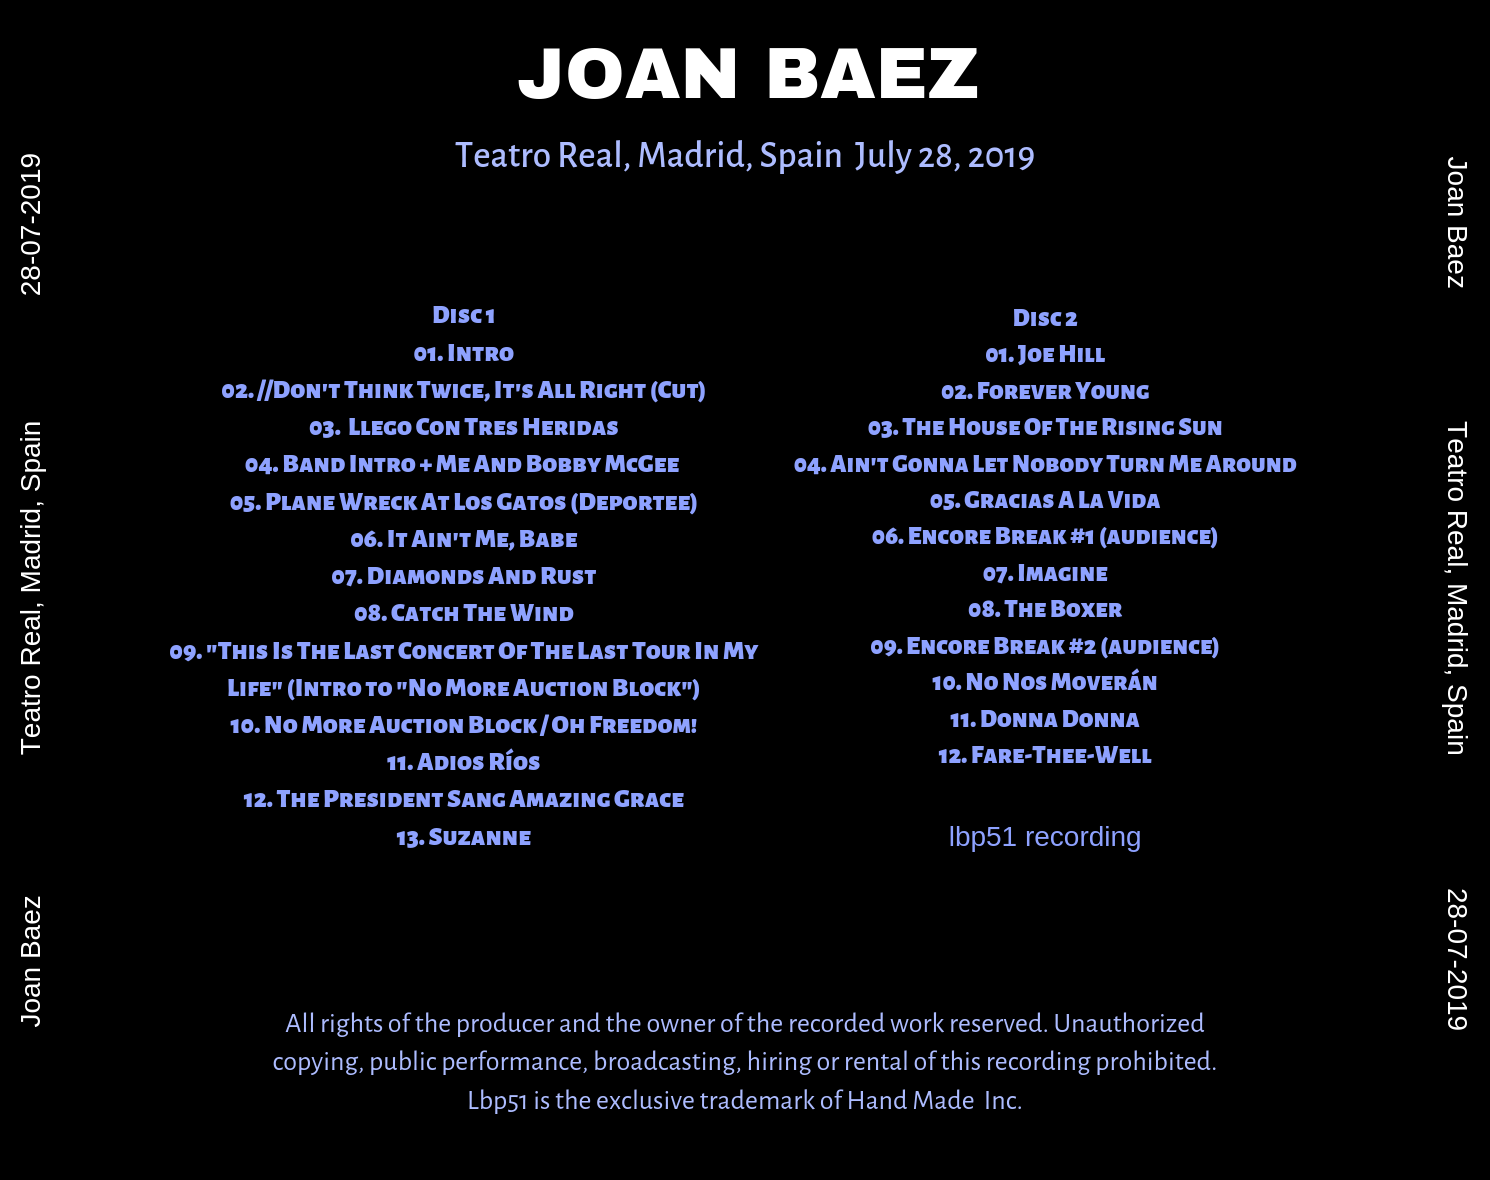 JoanBaez2019-07-28TeatroRealMadridSpain (6).png